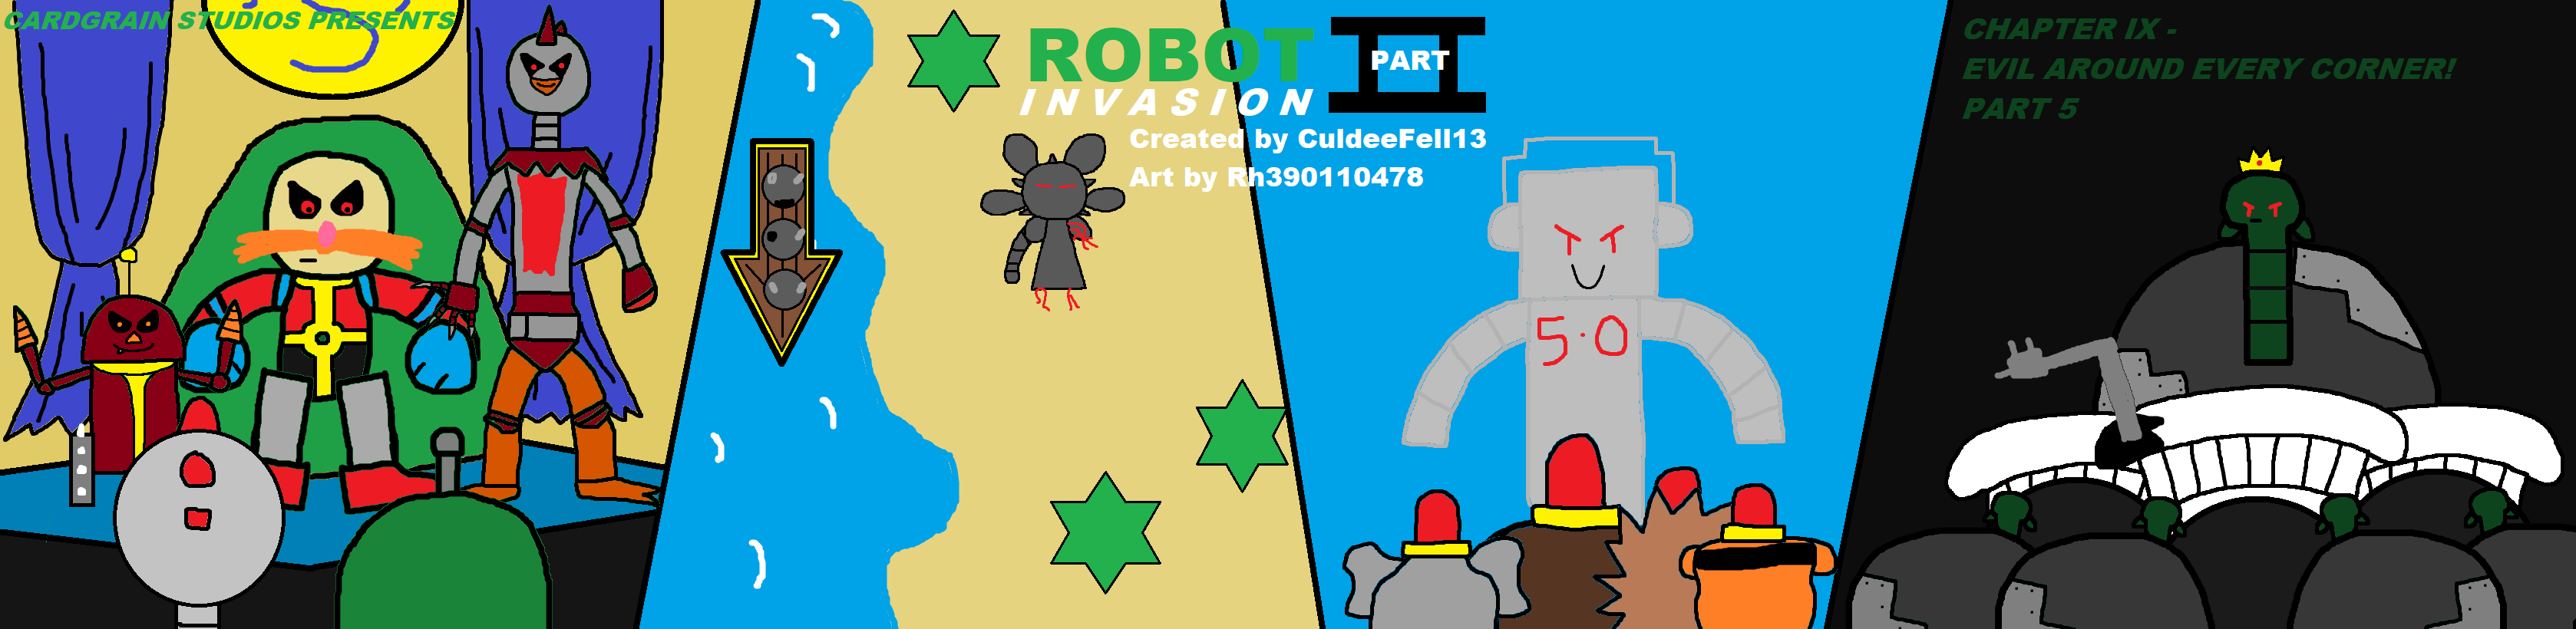 Robot Invasion Part Ii Sml Fanon Wiki Fandom - design it dress up as shrek instant 1st place roblox